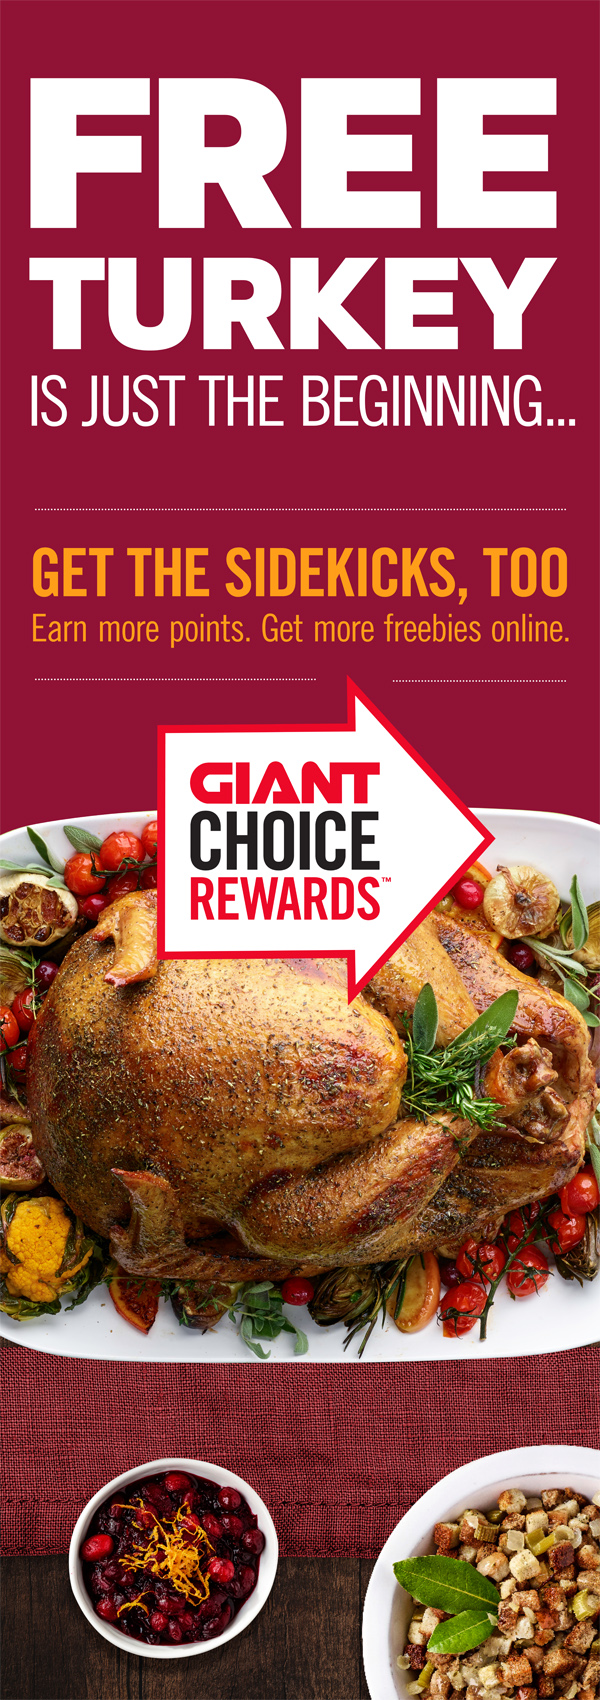 Giant offers Free Turkeys Delaware Valley News